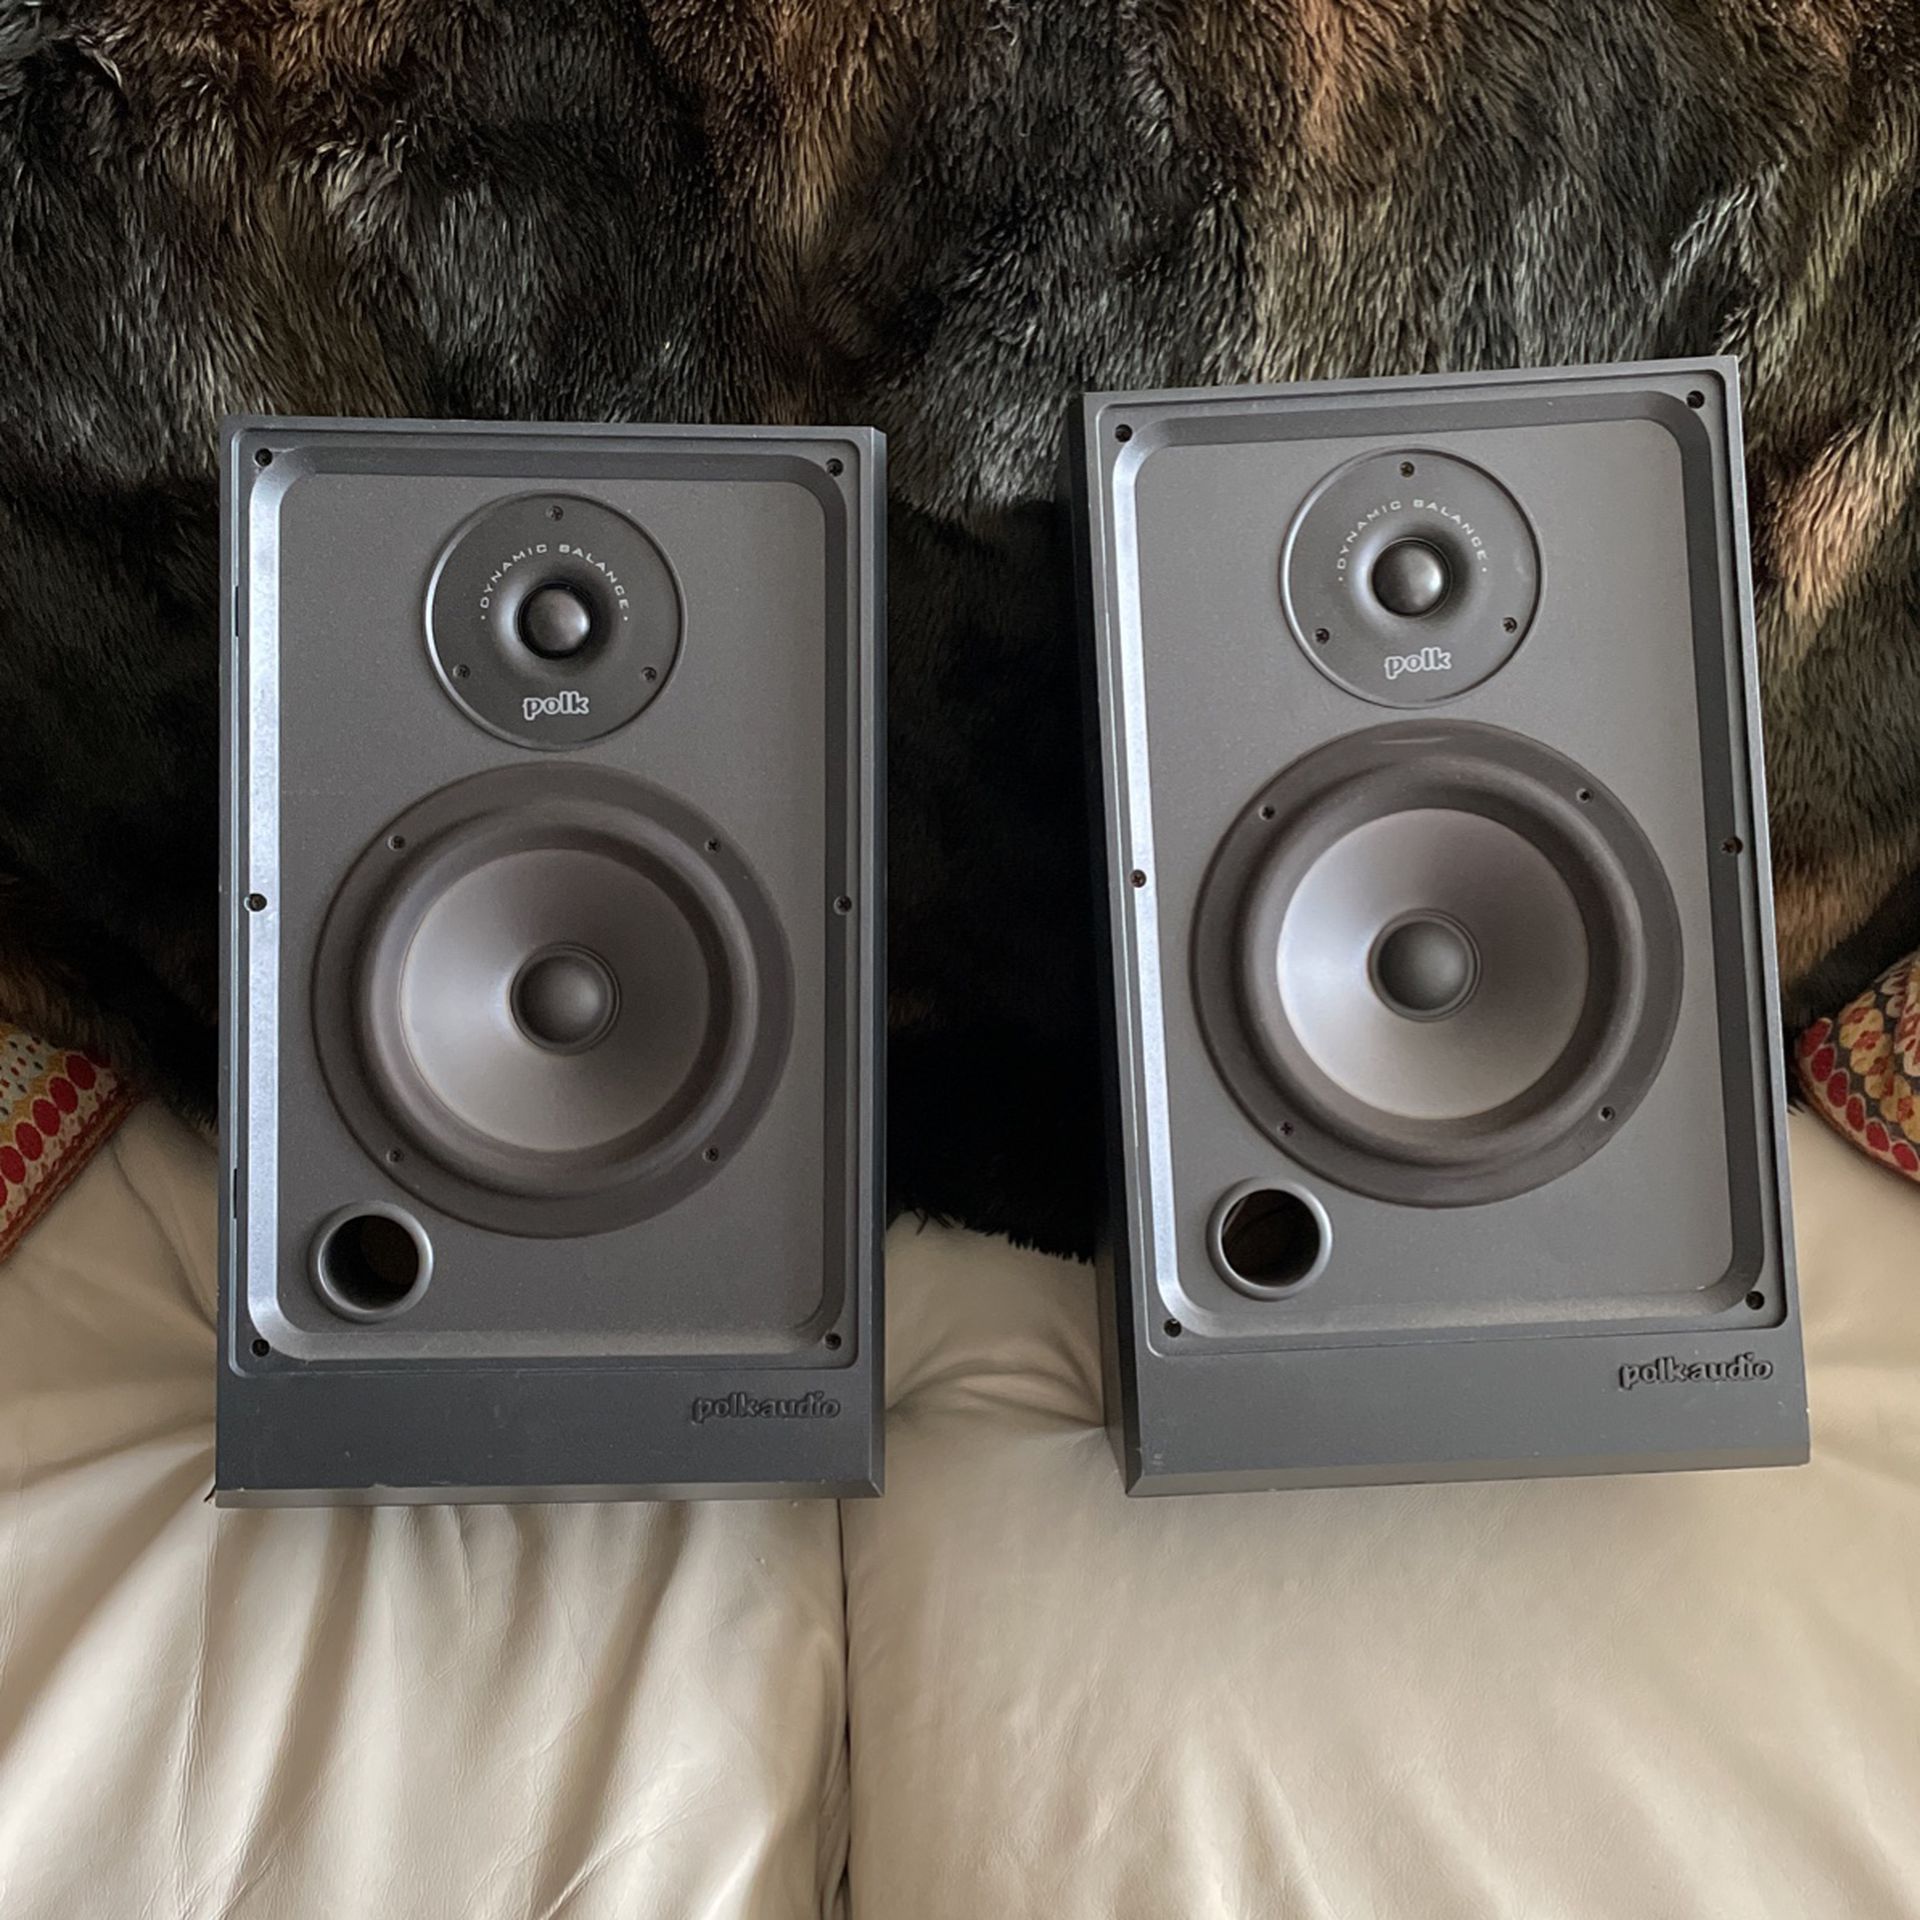 Polk audio Model S4 Speakers